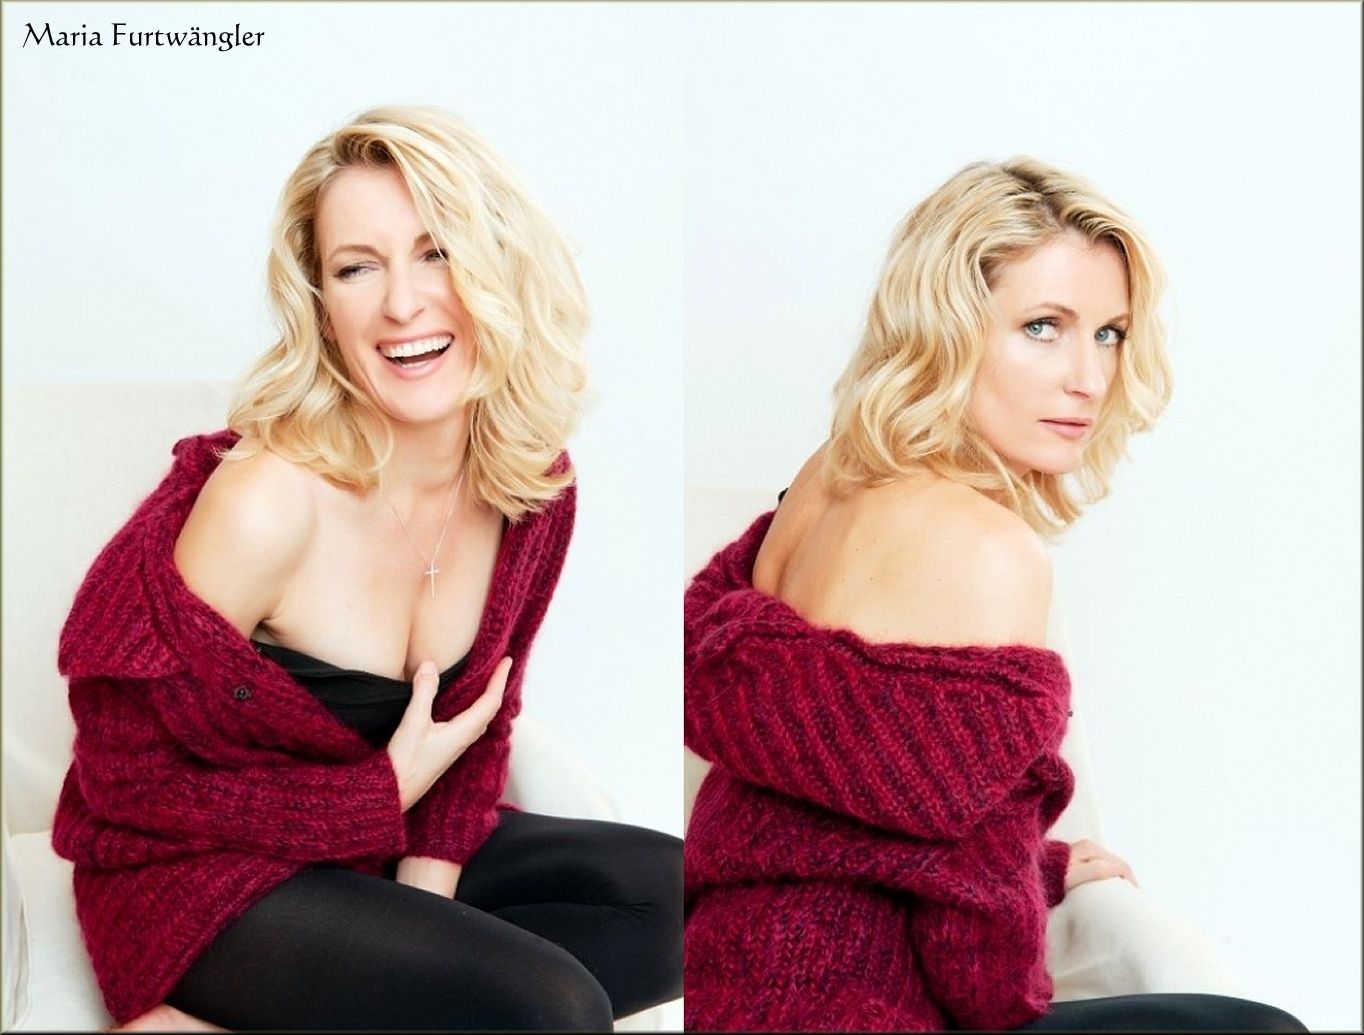 Check out Maria Furtwängler’s sexy red carpet, modeling photos and screensh...